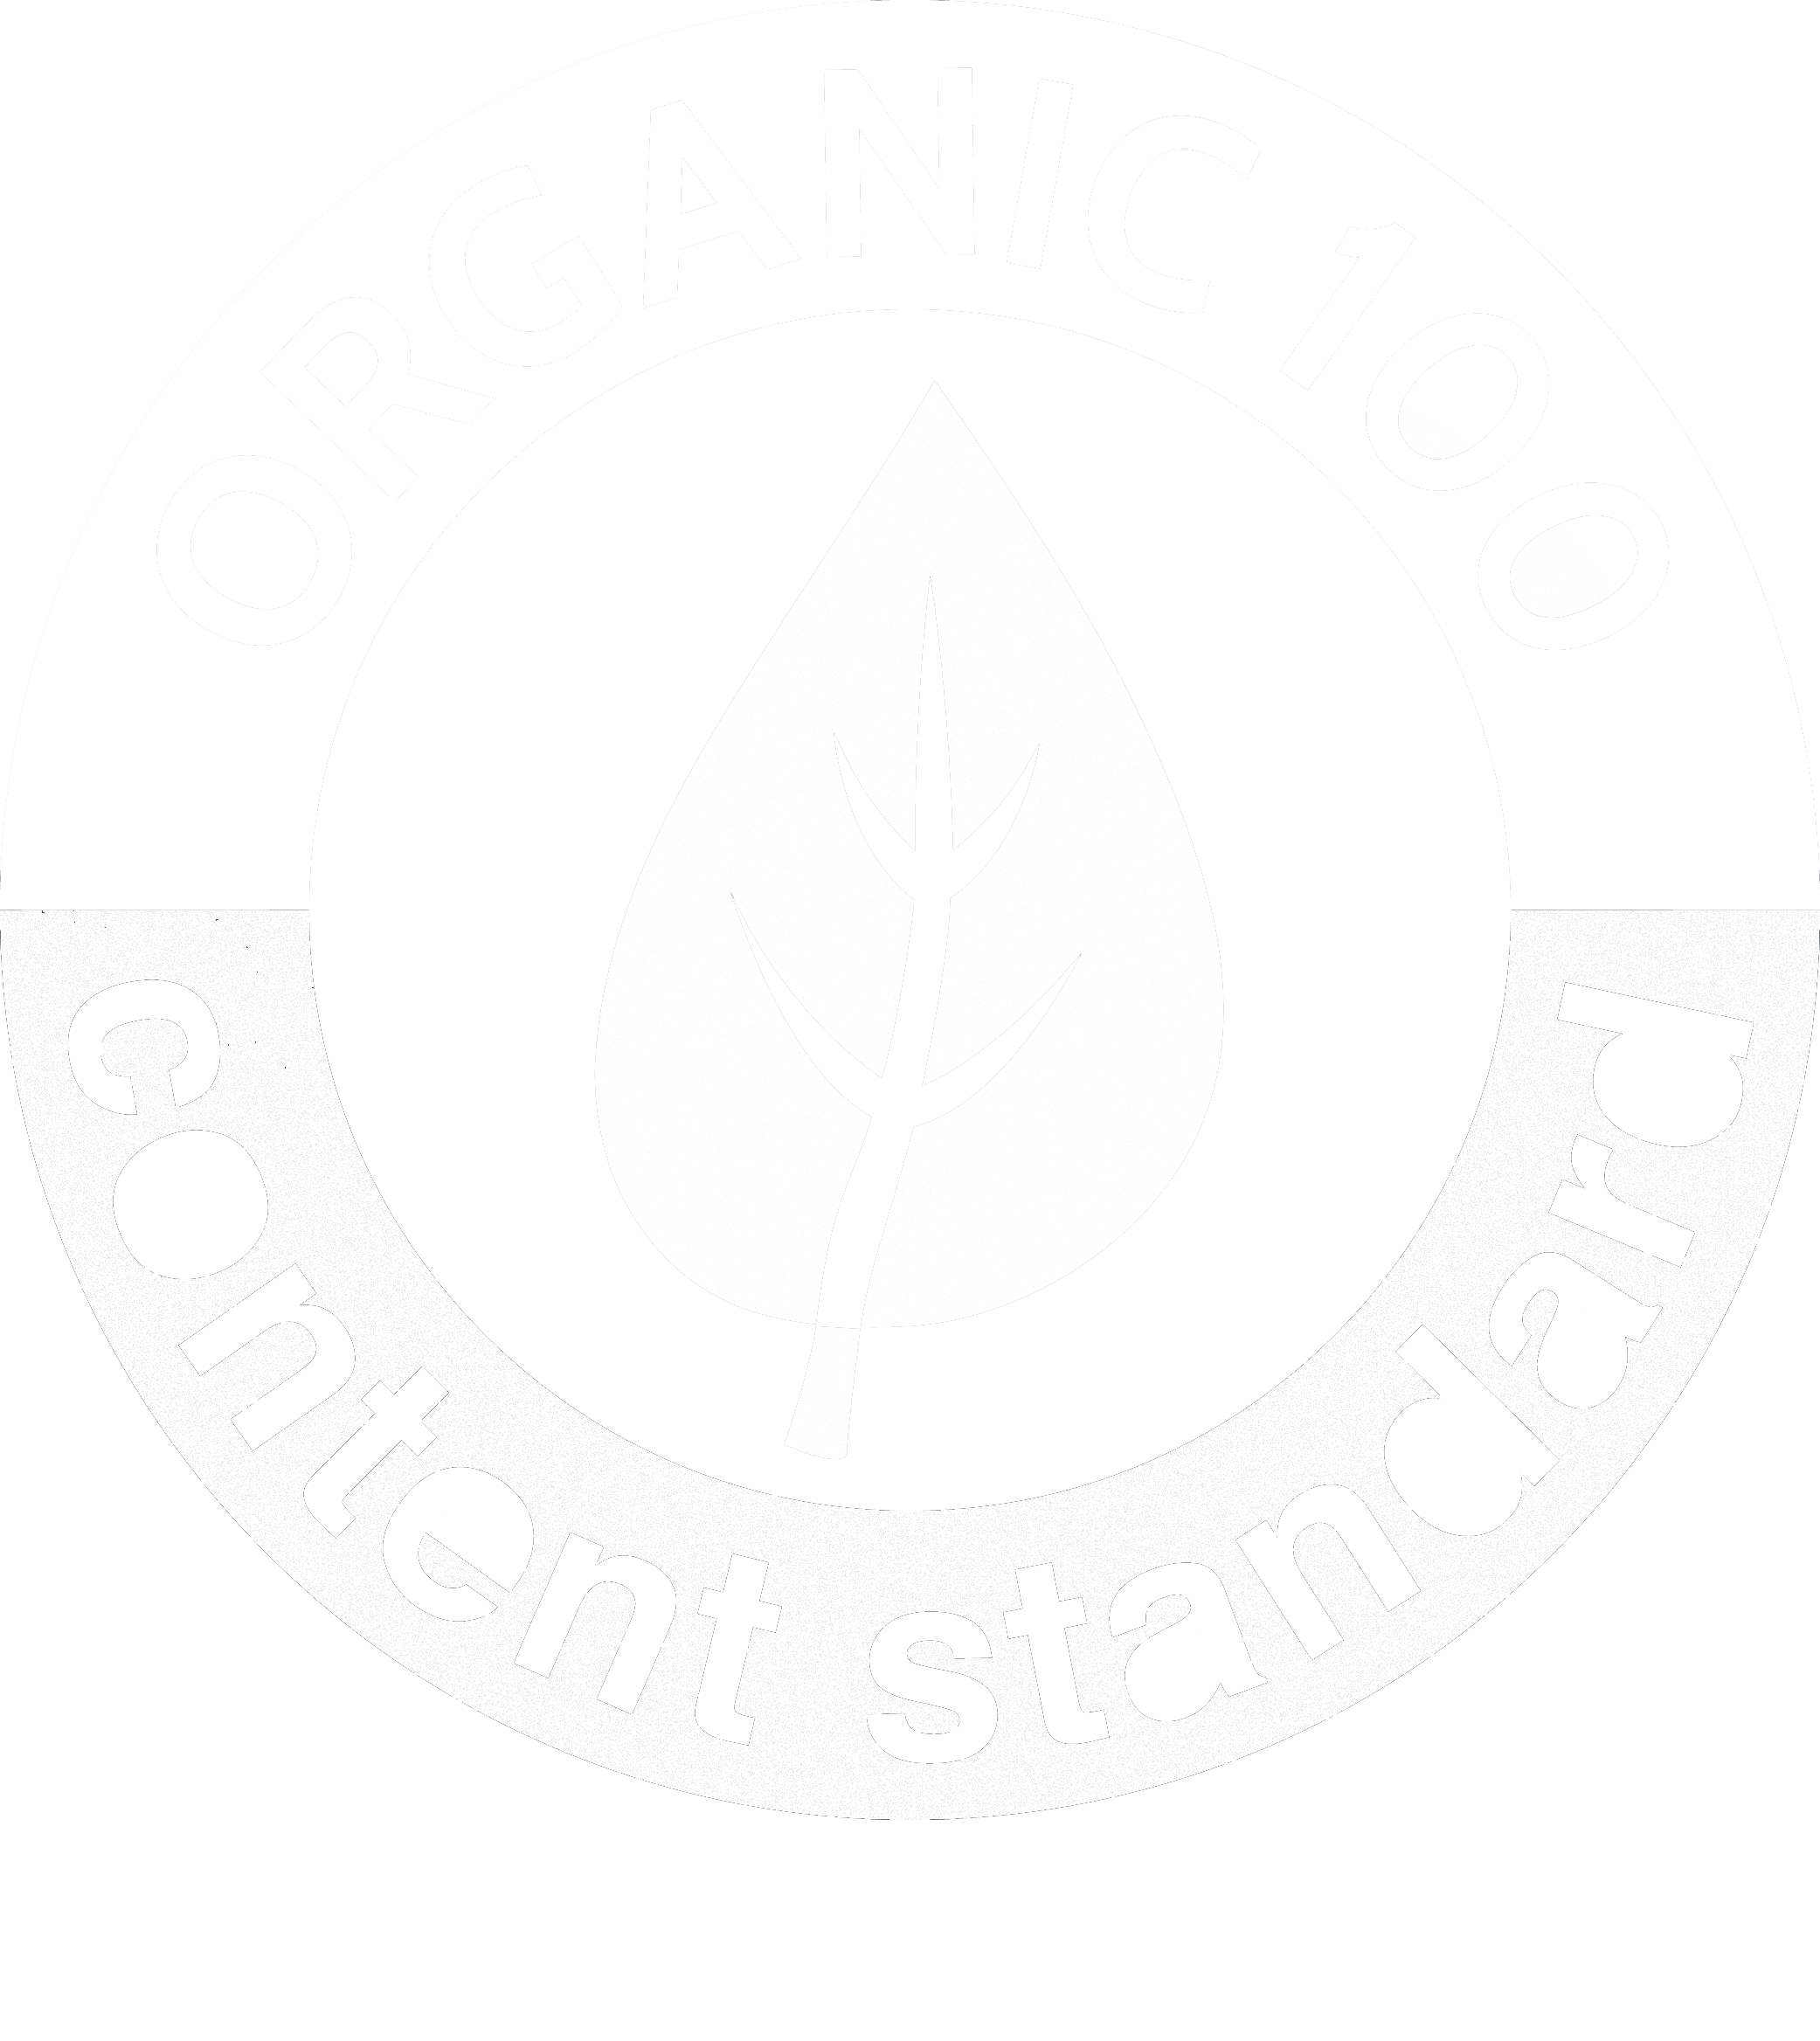 OCS – Organic Content Standard